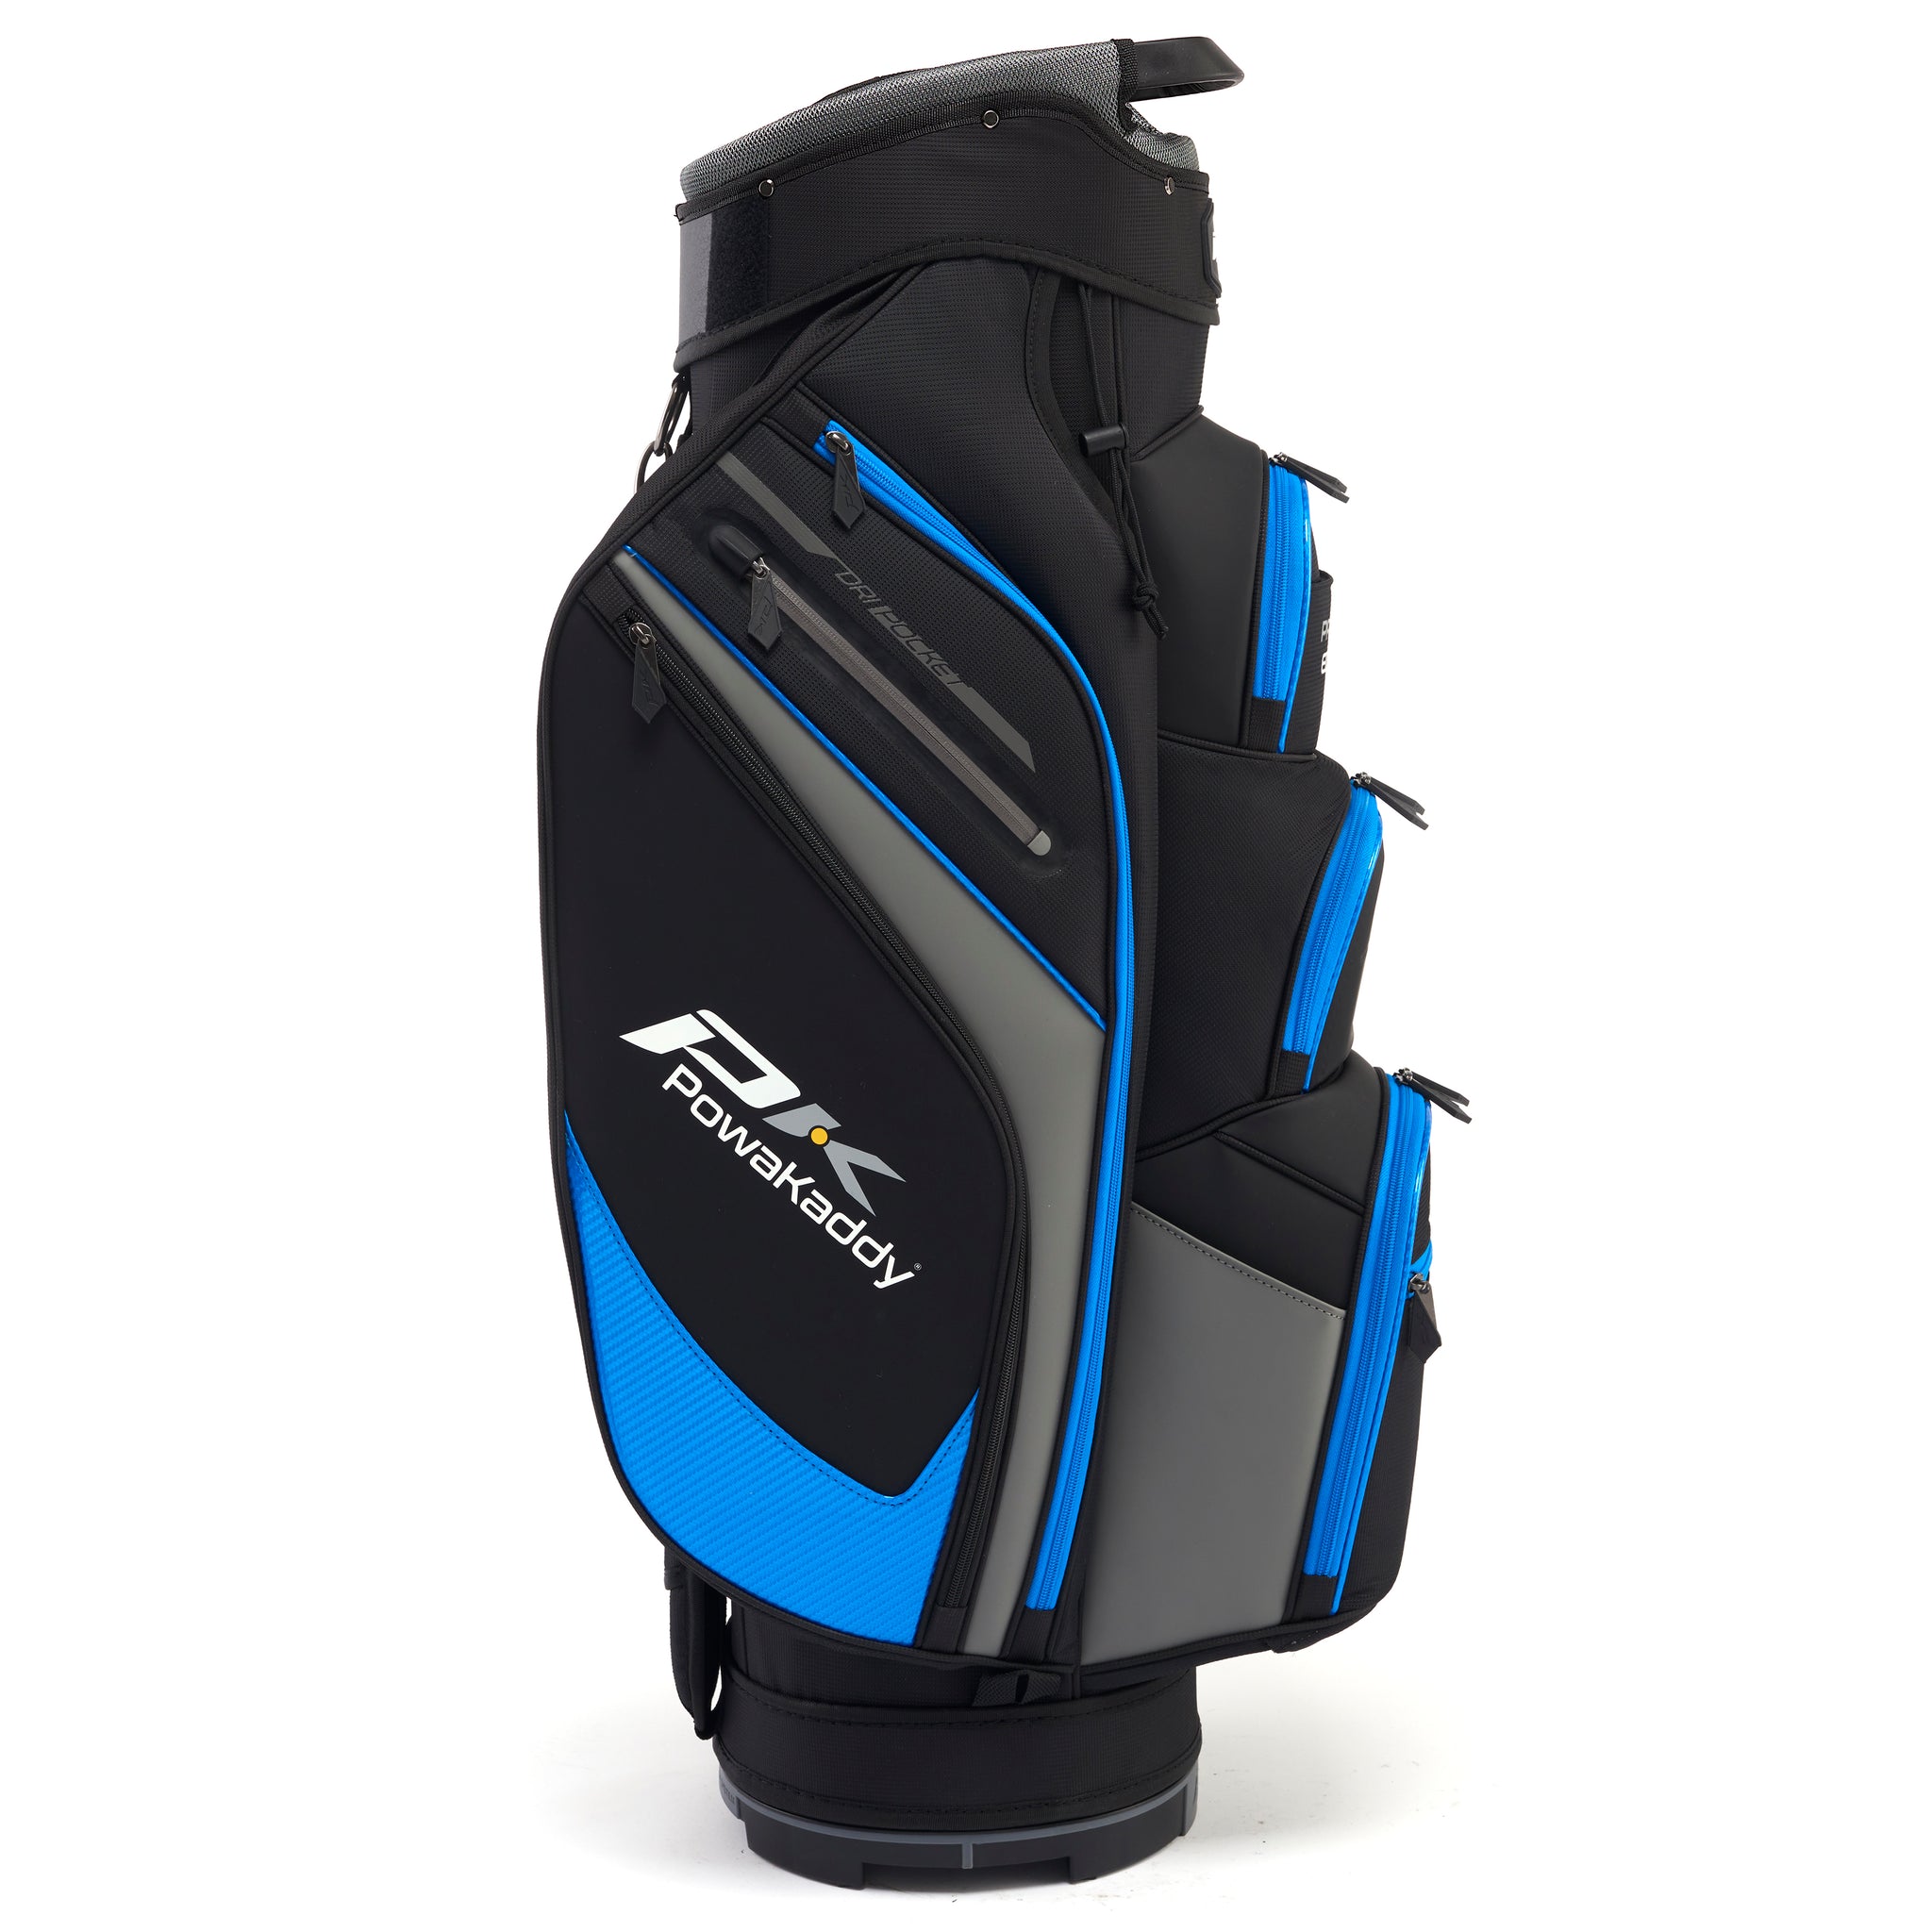 powakaddy-premium-edition-cart-bag-02503-04-01-black-gun-blue